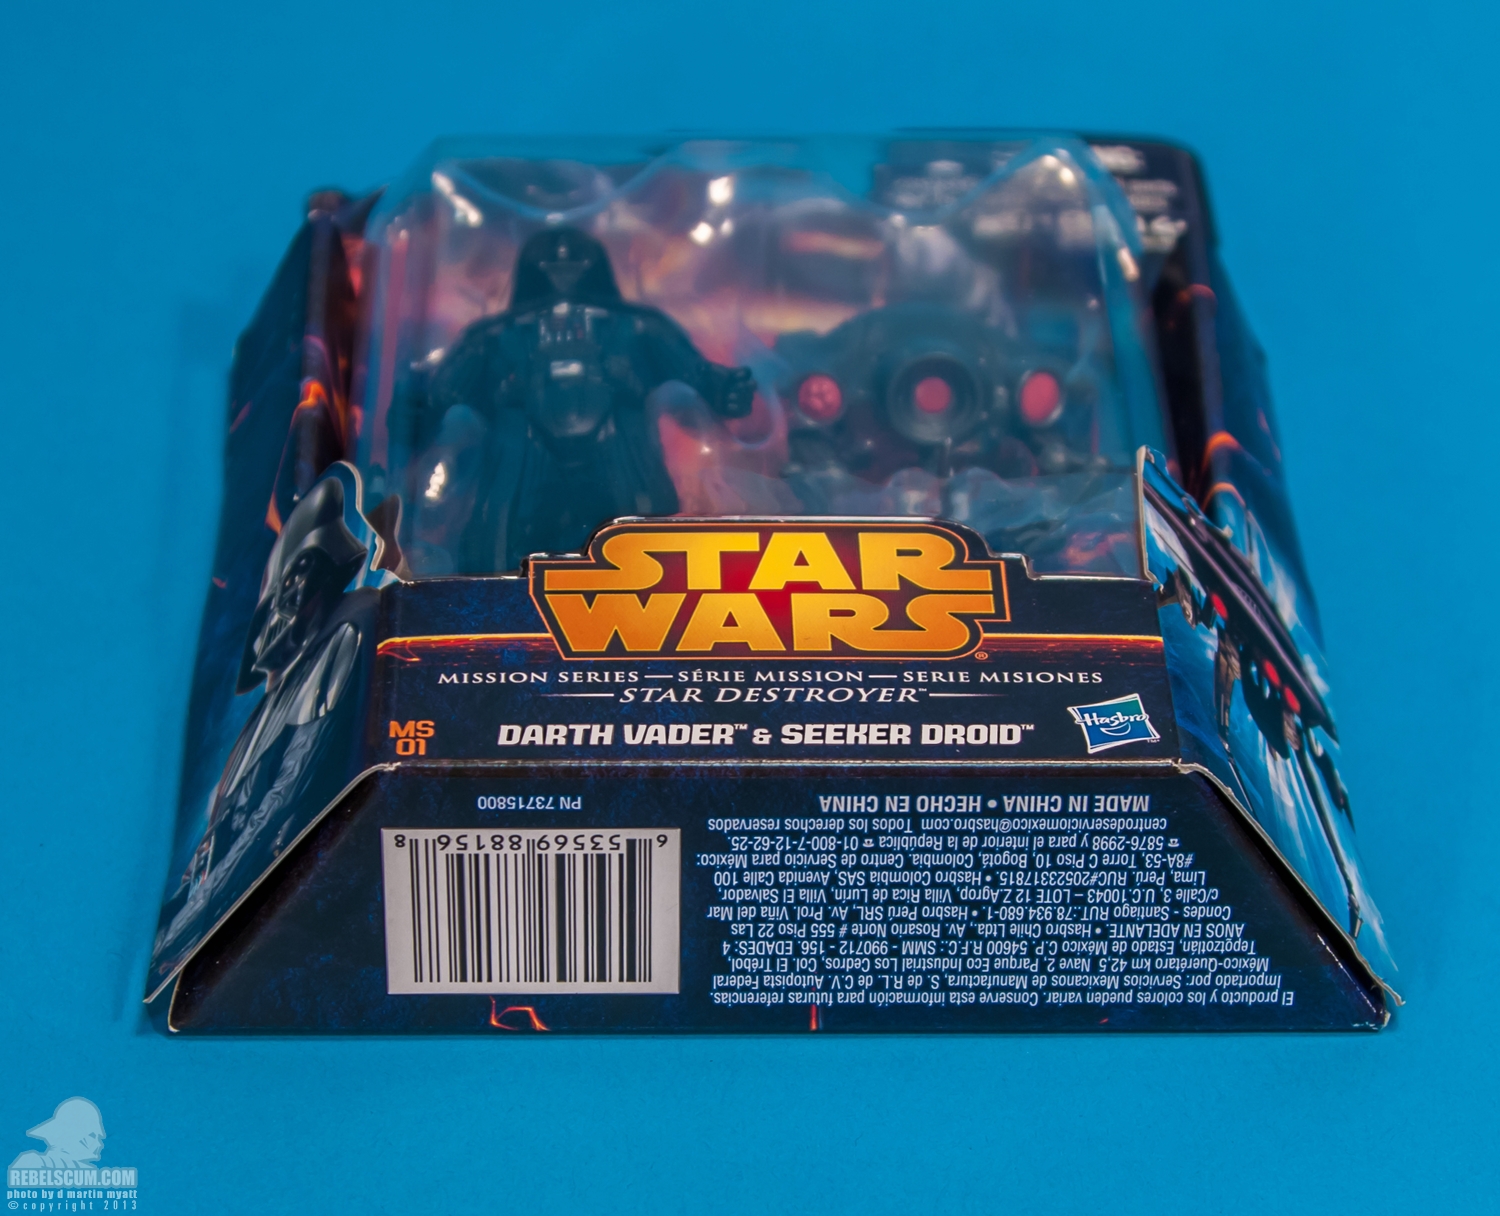 Darth-Vader-Seeker-Droid-Mission-Series-Star-Destroyer-026.jpg